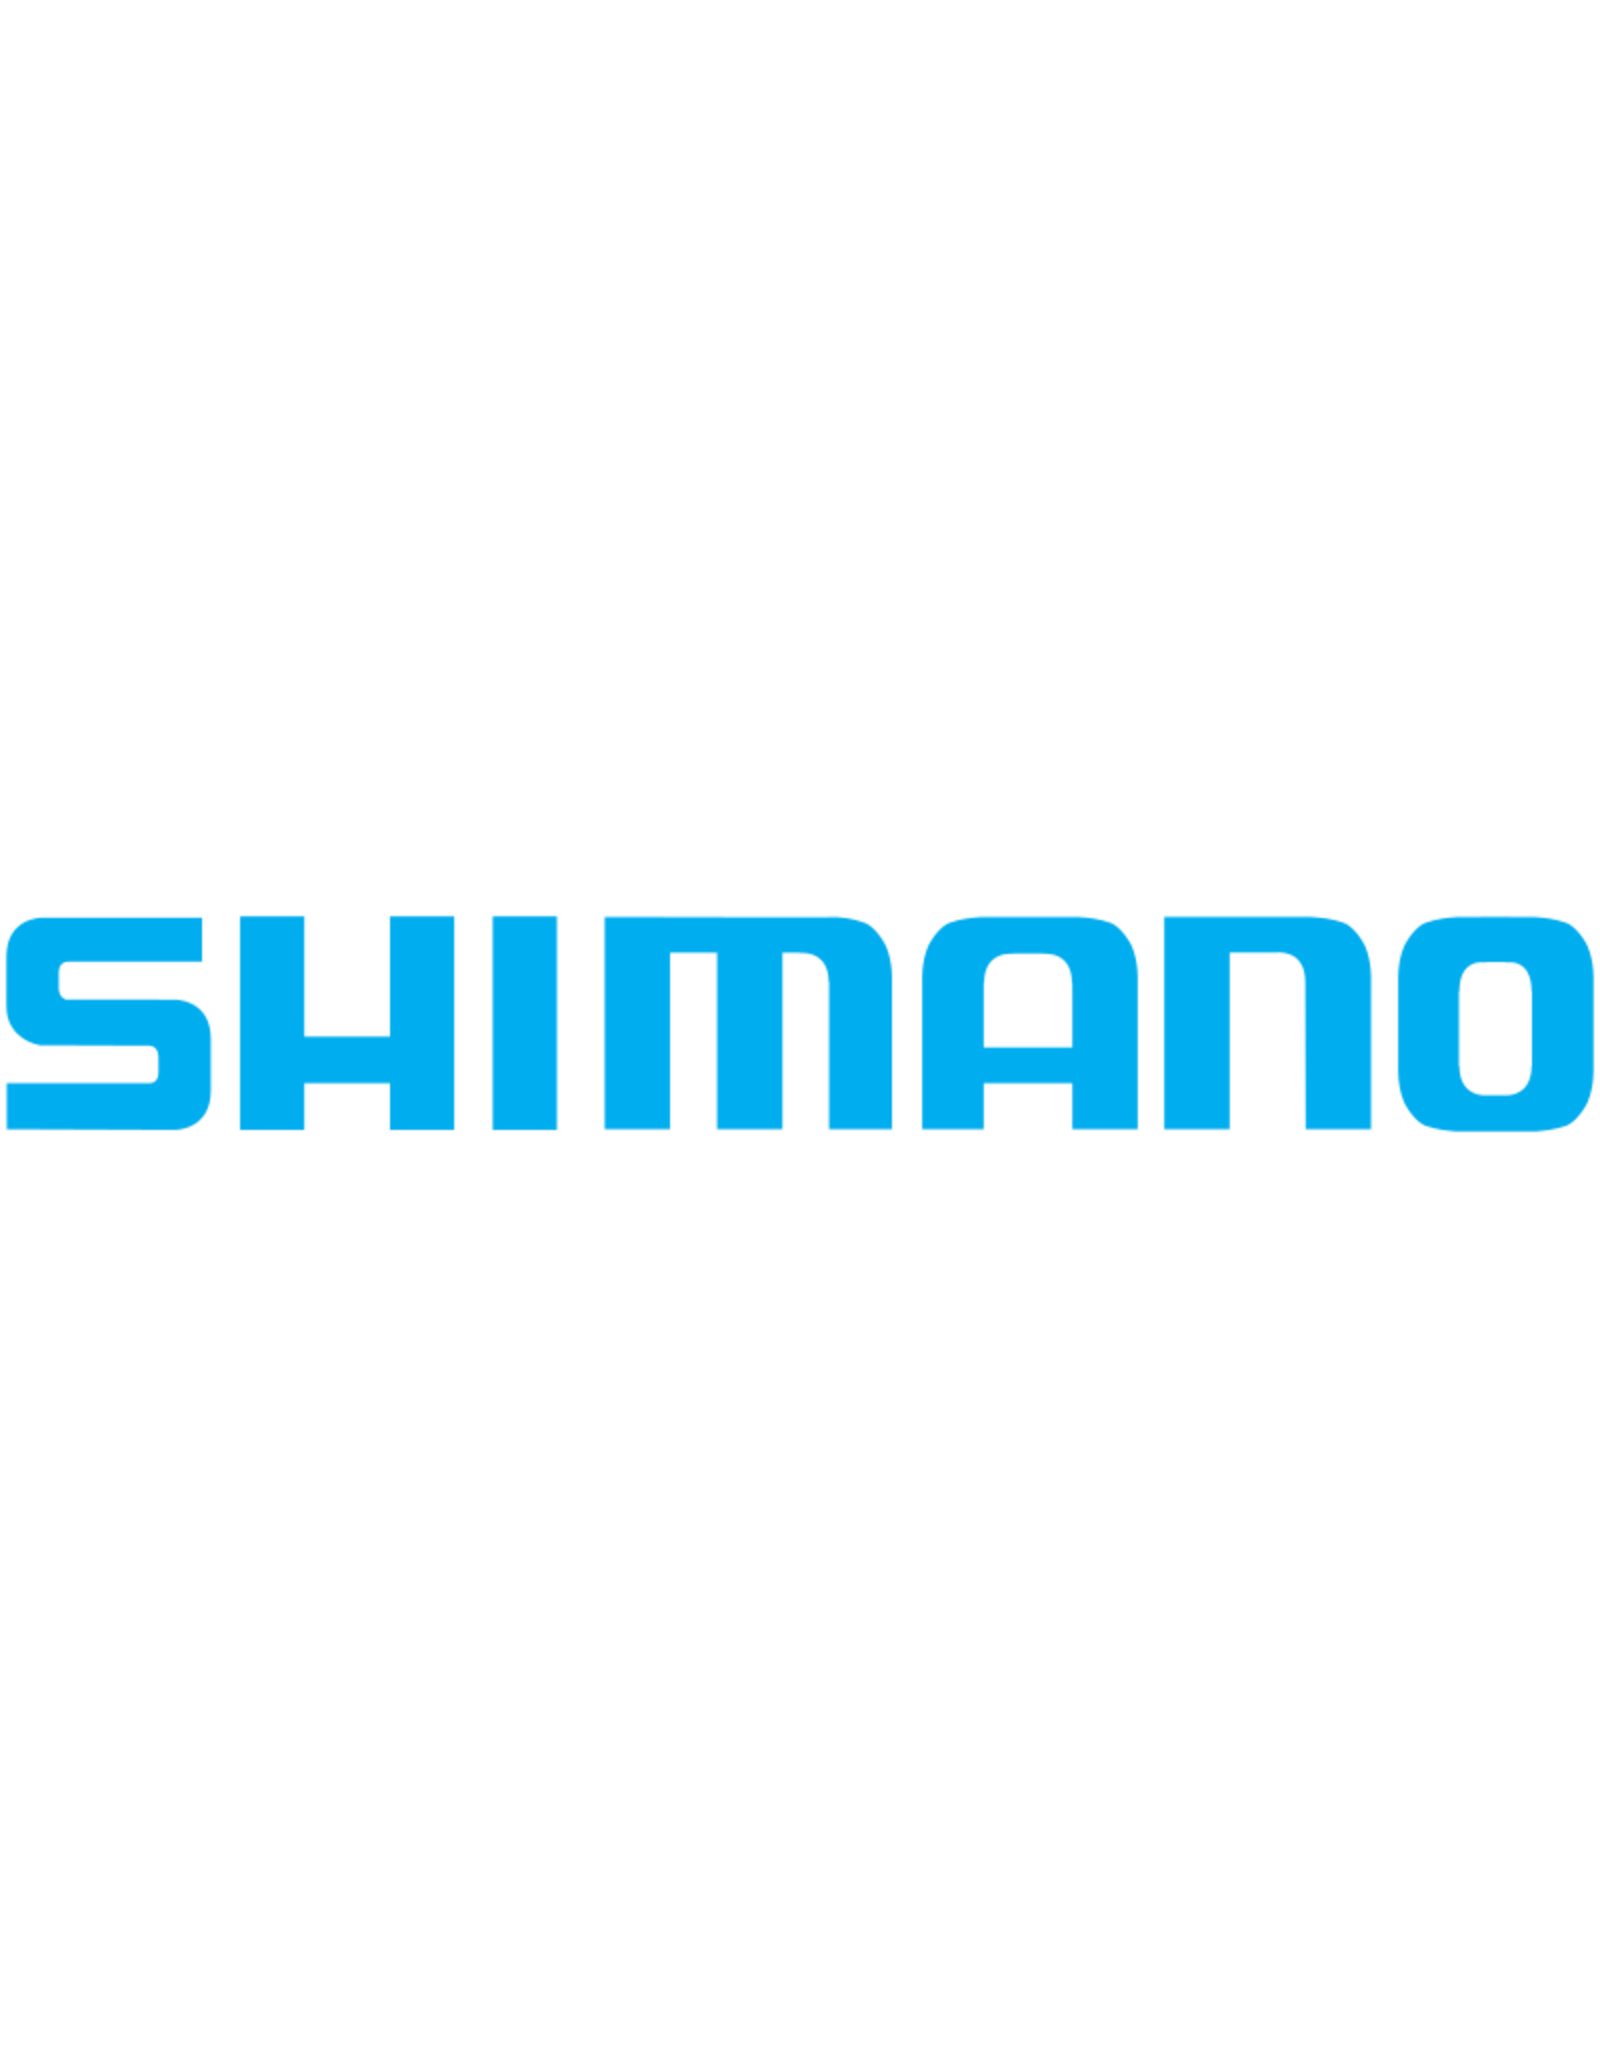 Shimano RD17830  MAIN SHAFT ASSEMBLY